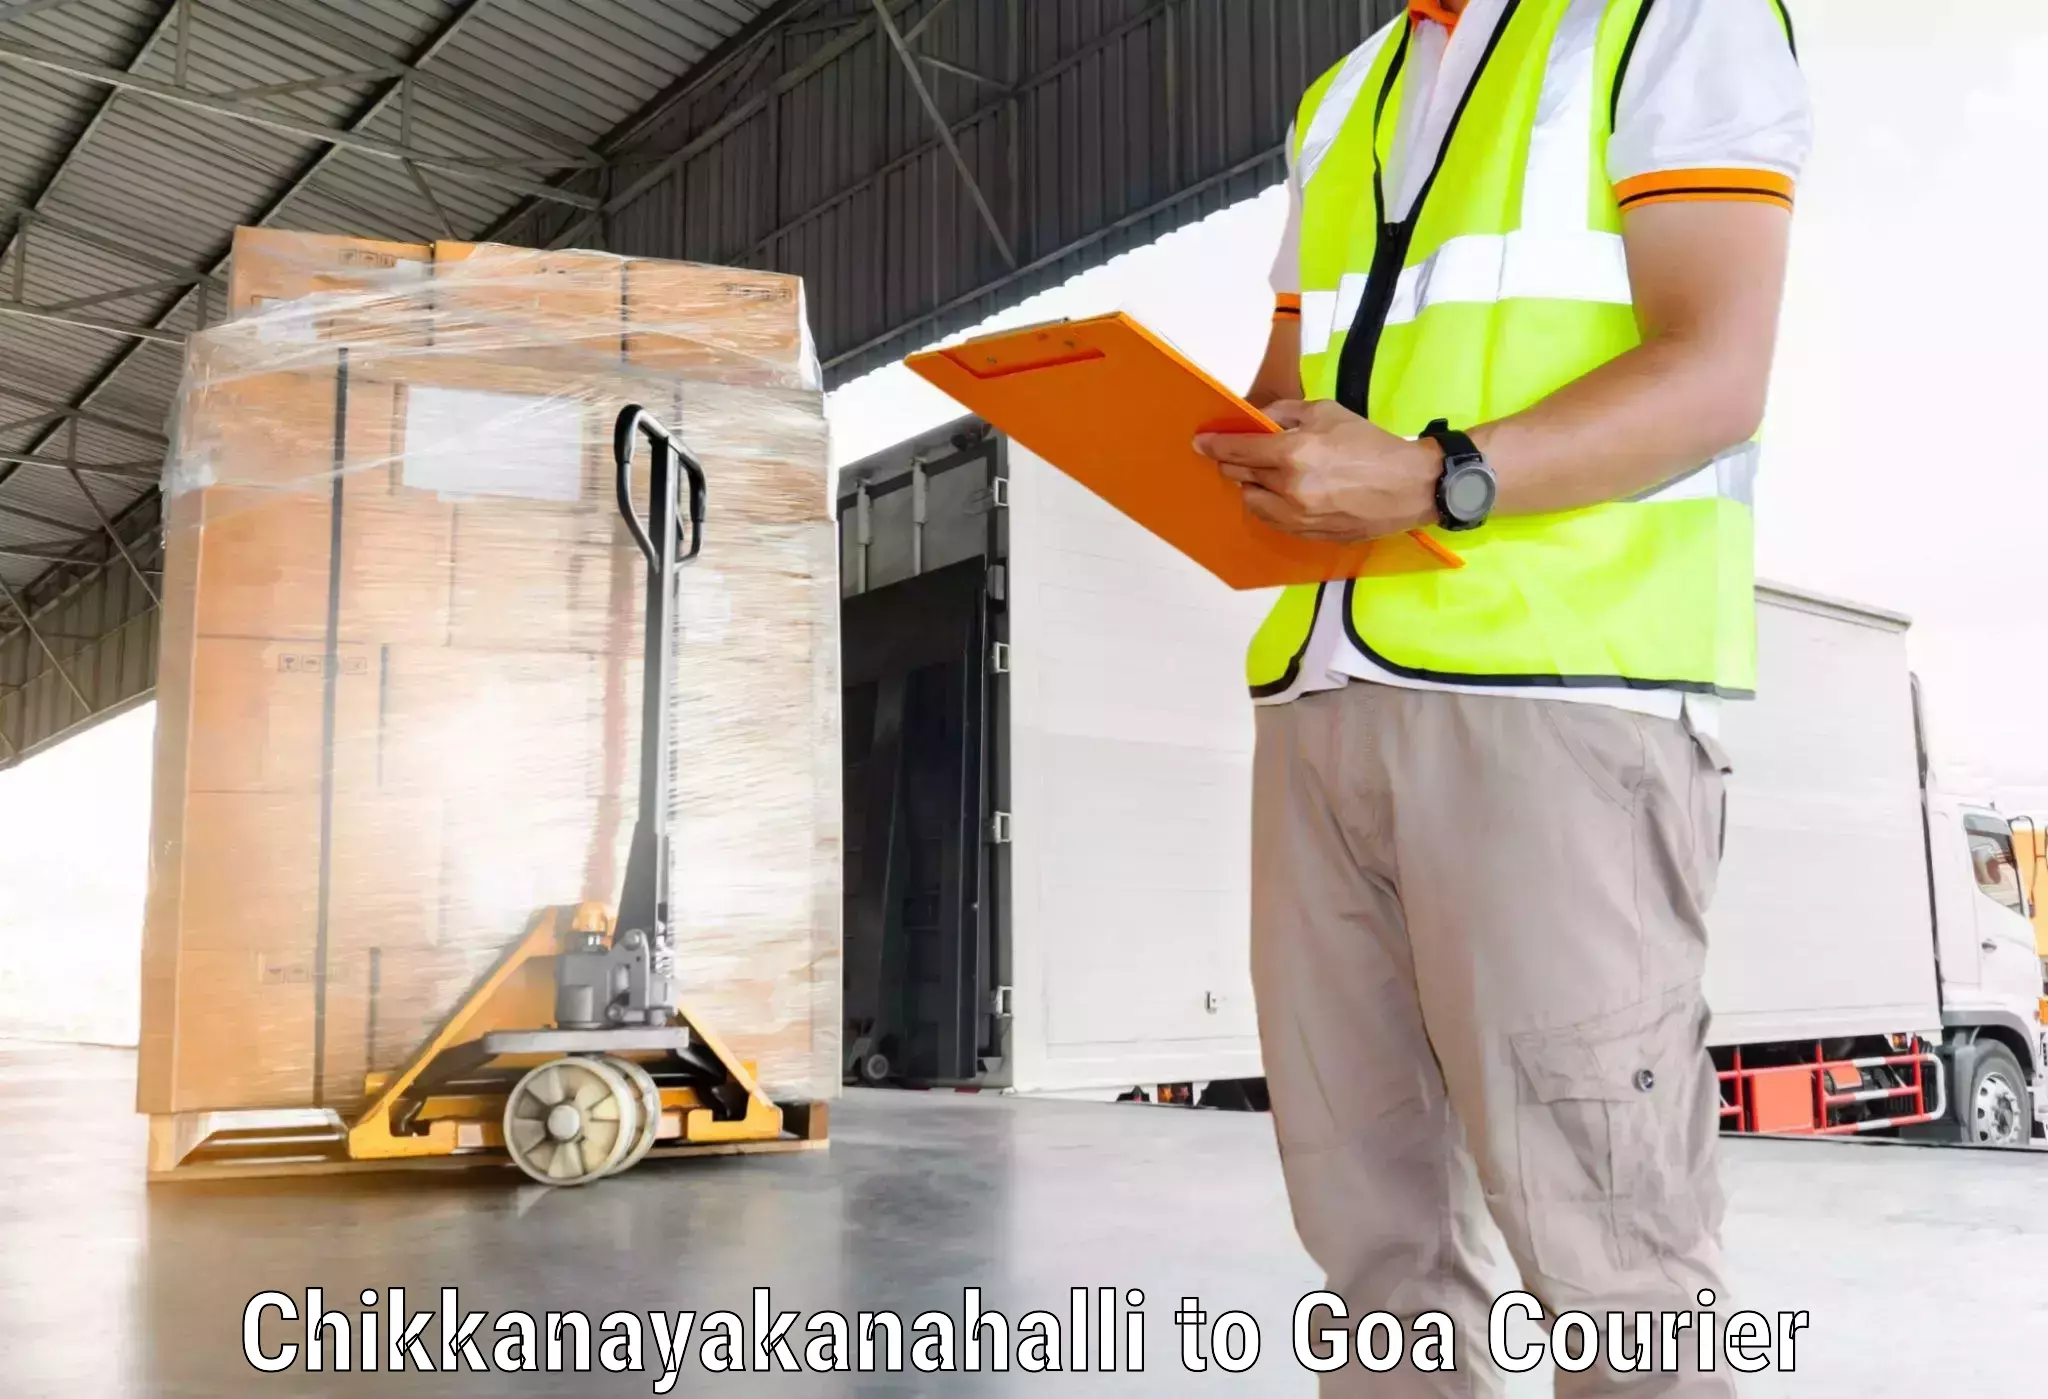 Local delivery service Chikkanayakanahalli to South Goa